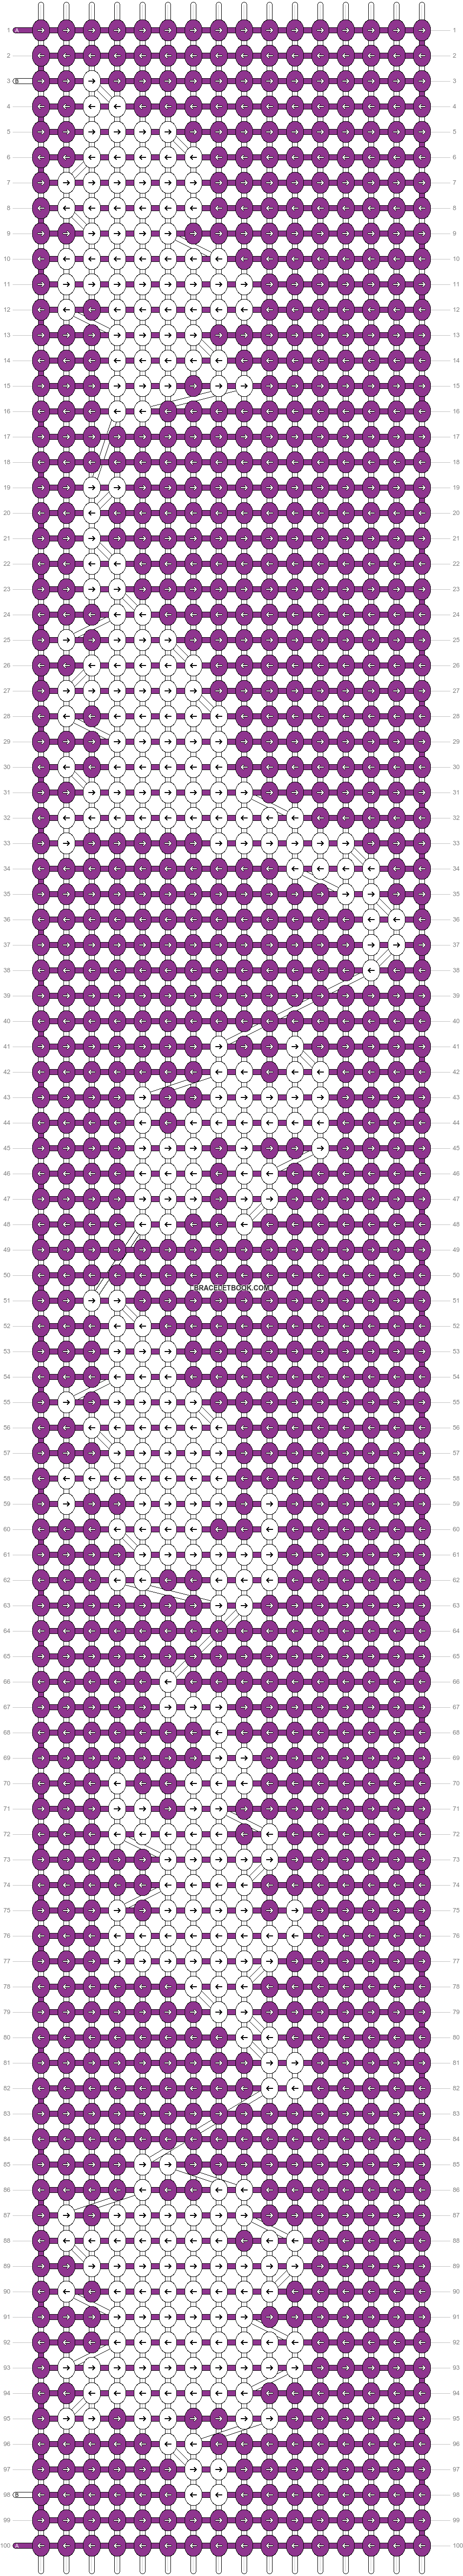 Alpha pattern #33661 variation #25274 pattern